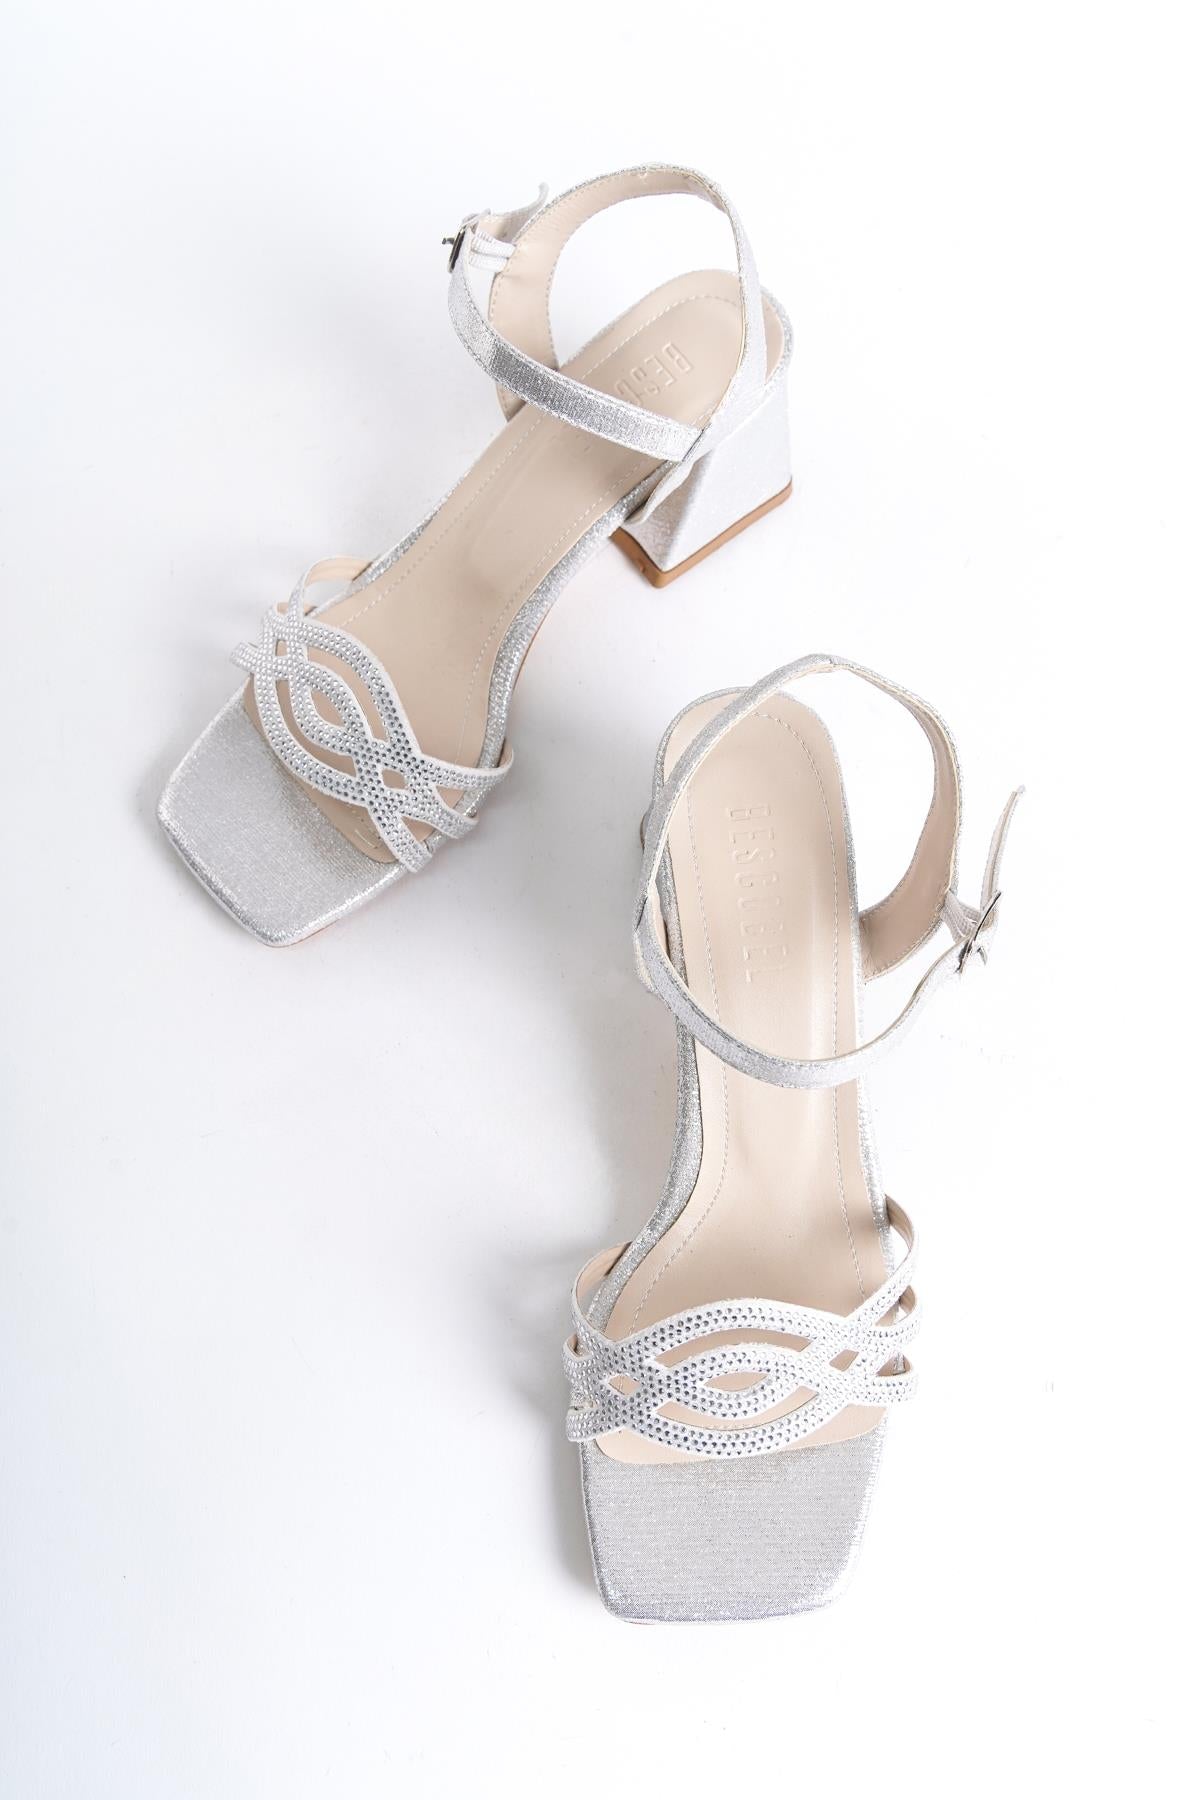 Women's Silver Yekm Low Heel Stone Evening Dress Sandals Shoes 201 - STREETMODE™